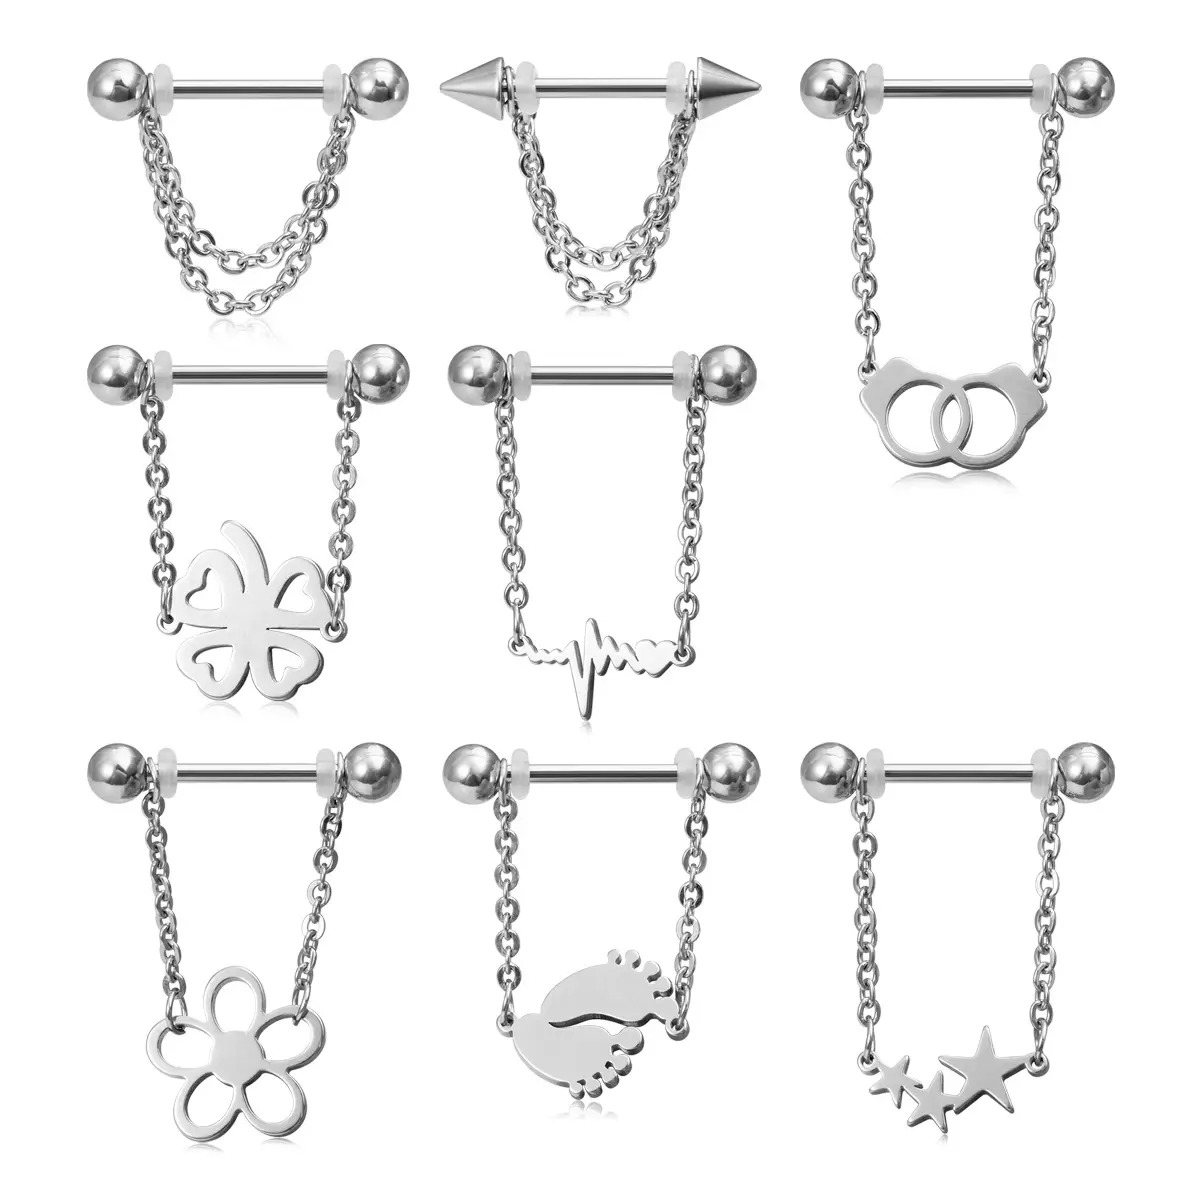 2401 new flower footprints star chain multiple breast ring set stainless steel body piercing nipple clip